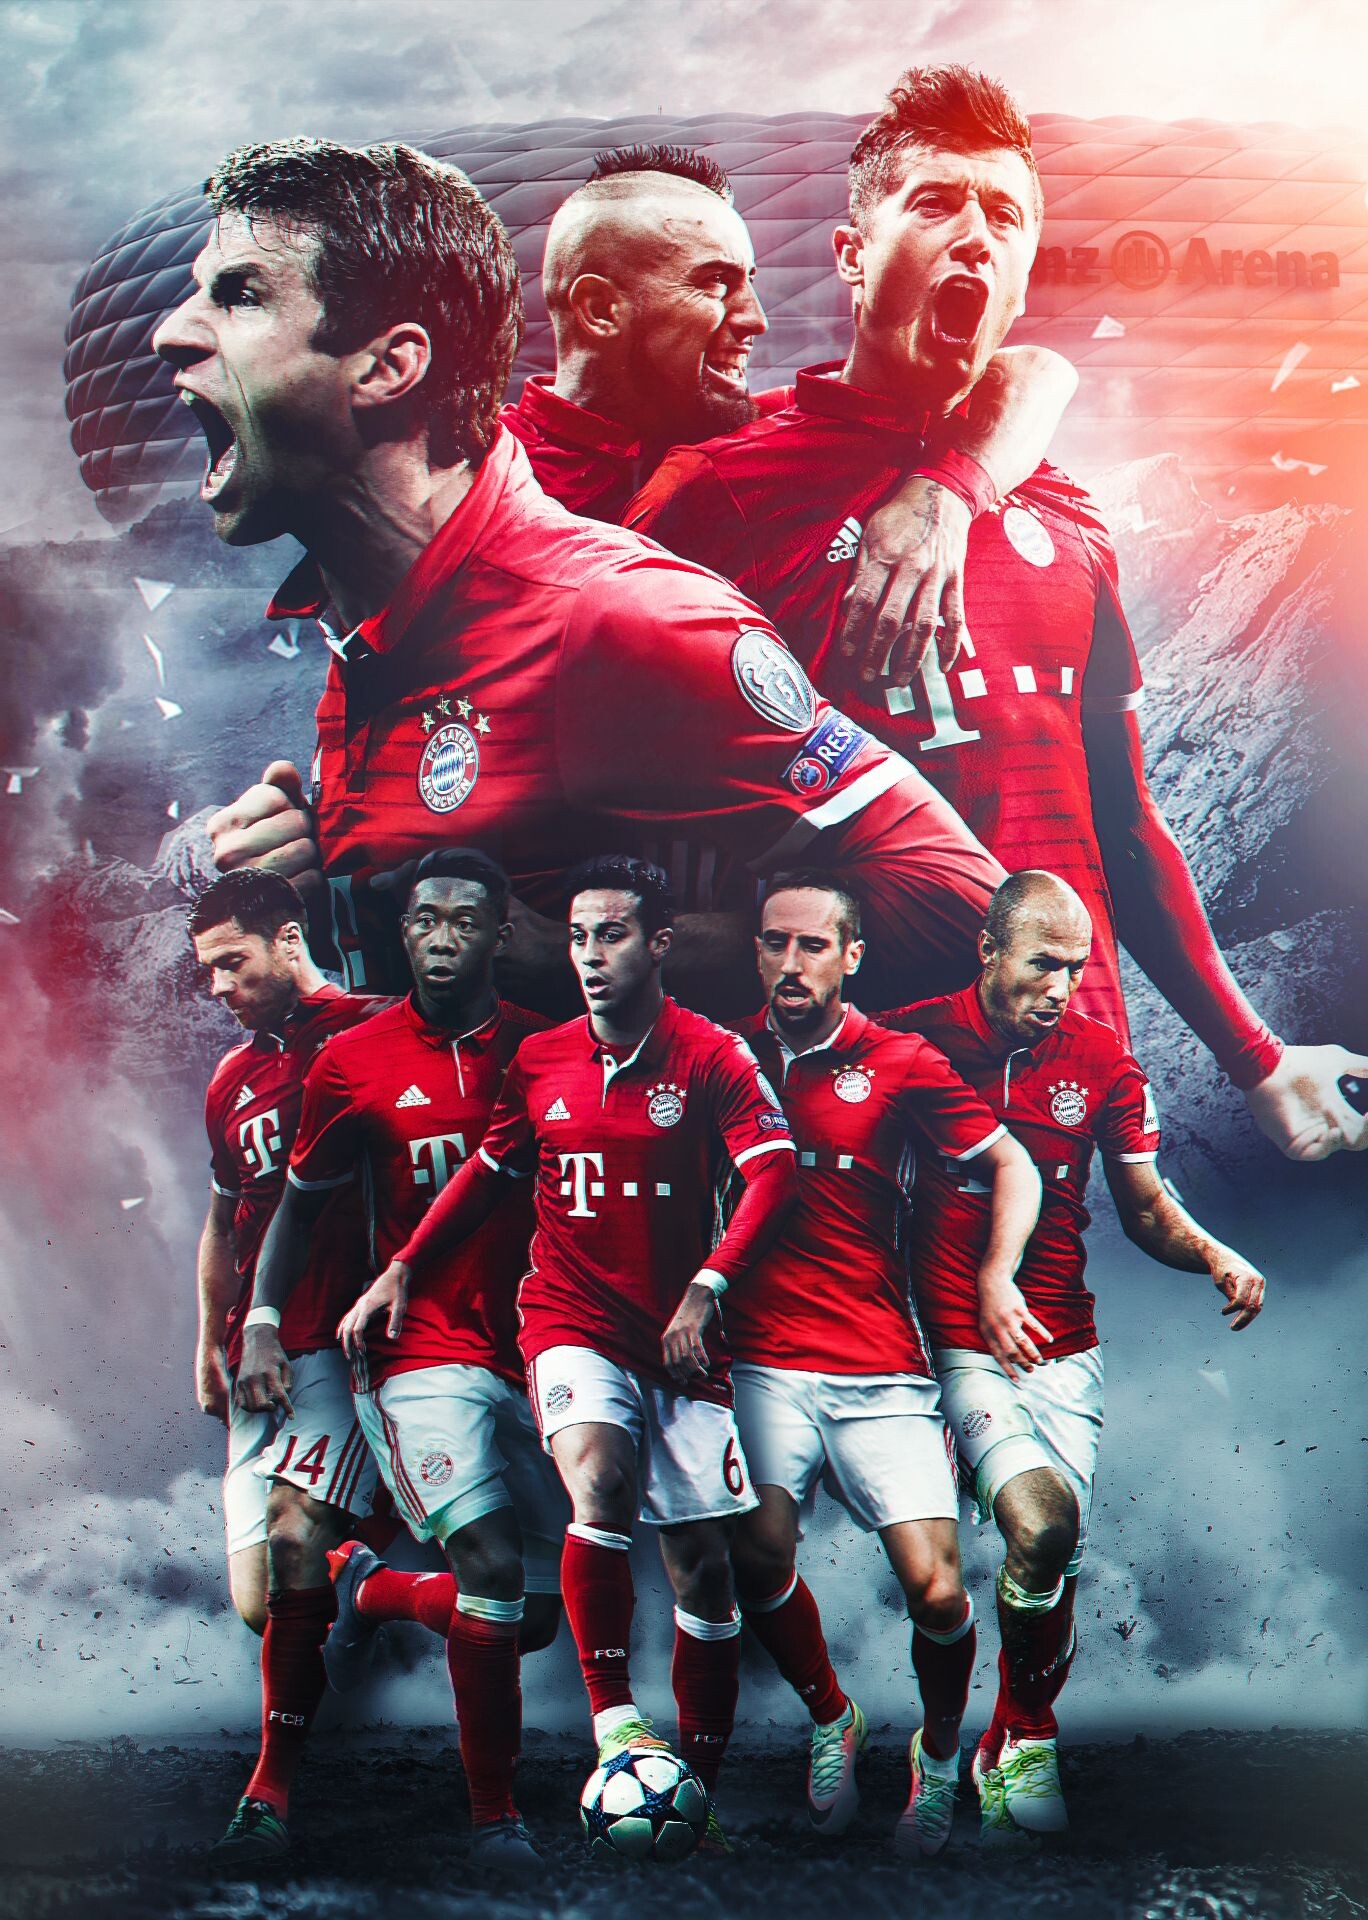 Germany Soccer Team: Bayern Munich, Robert Lewandowski, Thomas Muller, Arjen Robben, Franck Ribery, Robbery. 1370x1920 HD Wallpaper.